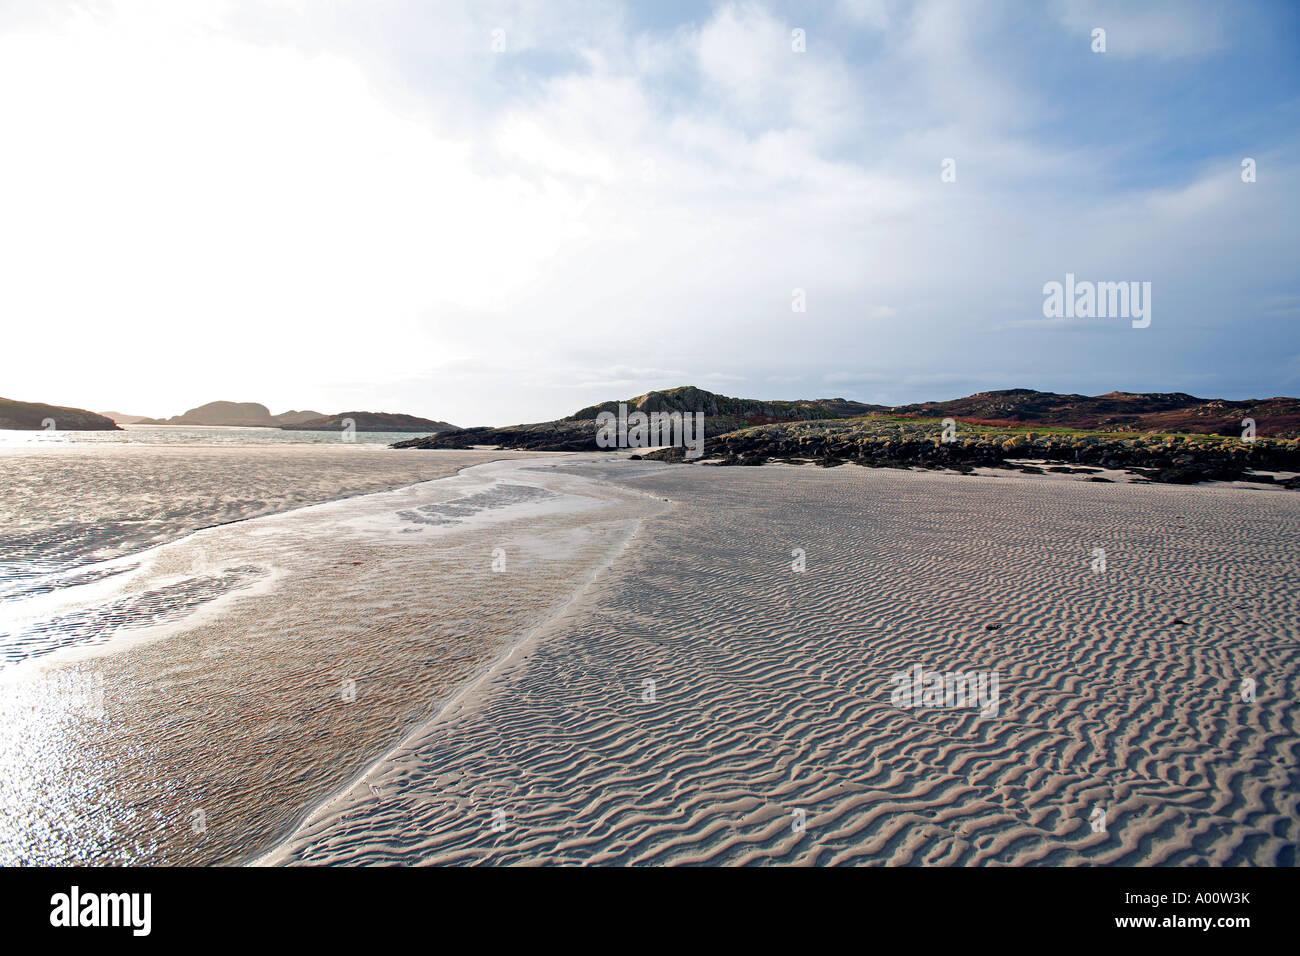 UNITED KINGDOM SCOTLAND WESTERN ISLES INNER HEBRIDES THE ISLAND OF MULL A BEACH AT ERRAID Stock Photo